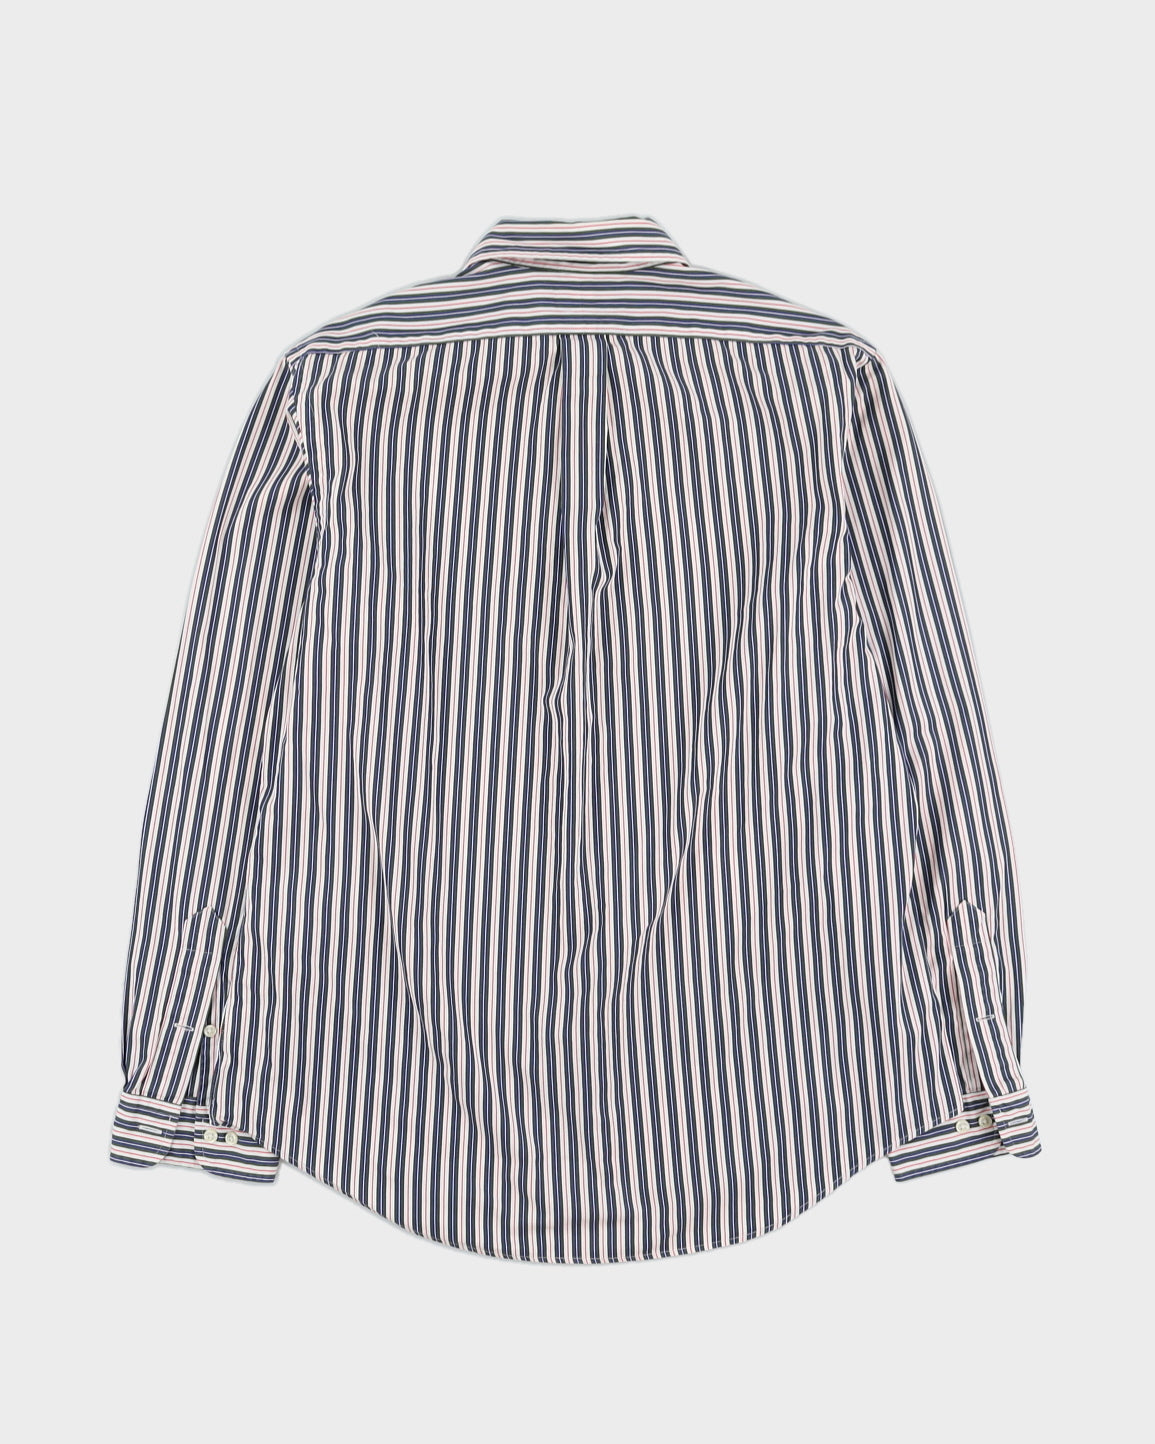 Vintage 90's Polo Ralph Lauren Striped Shirt - XXXL